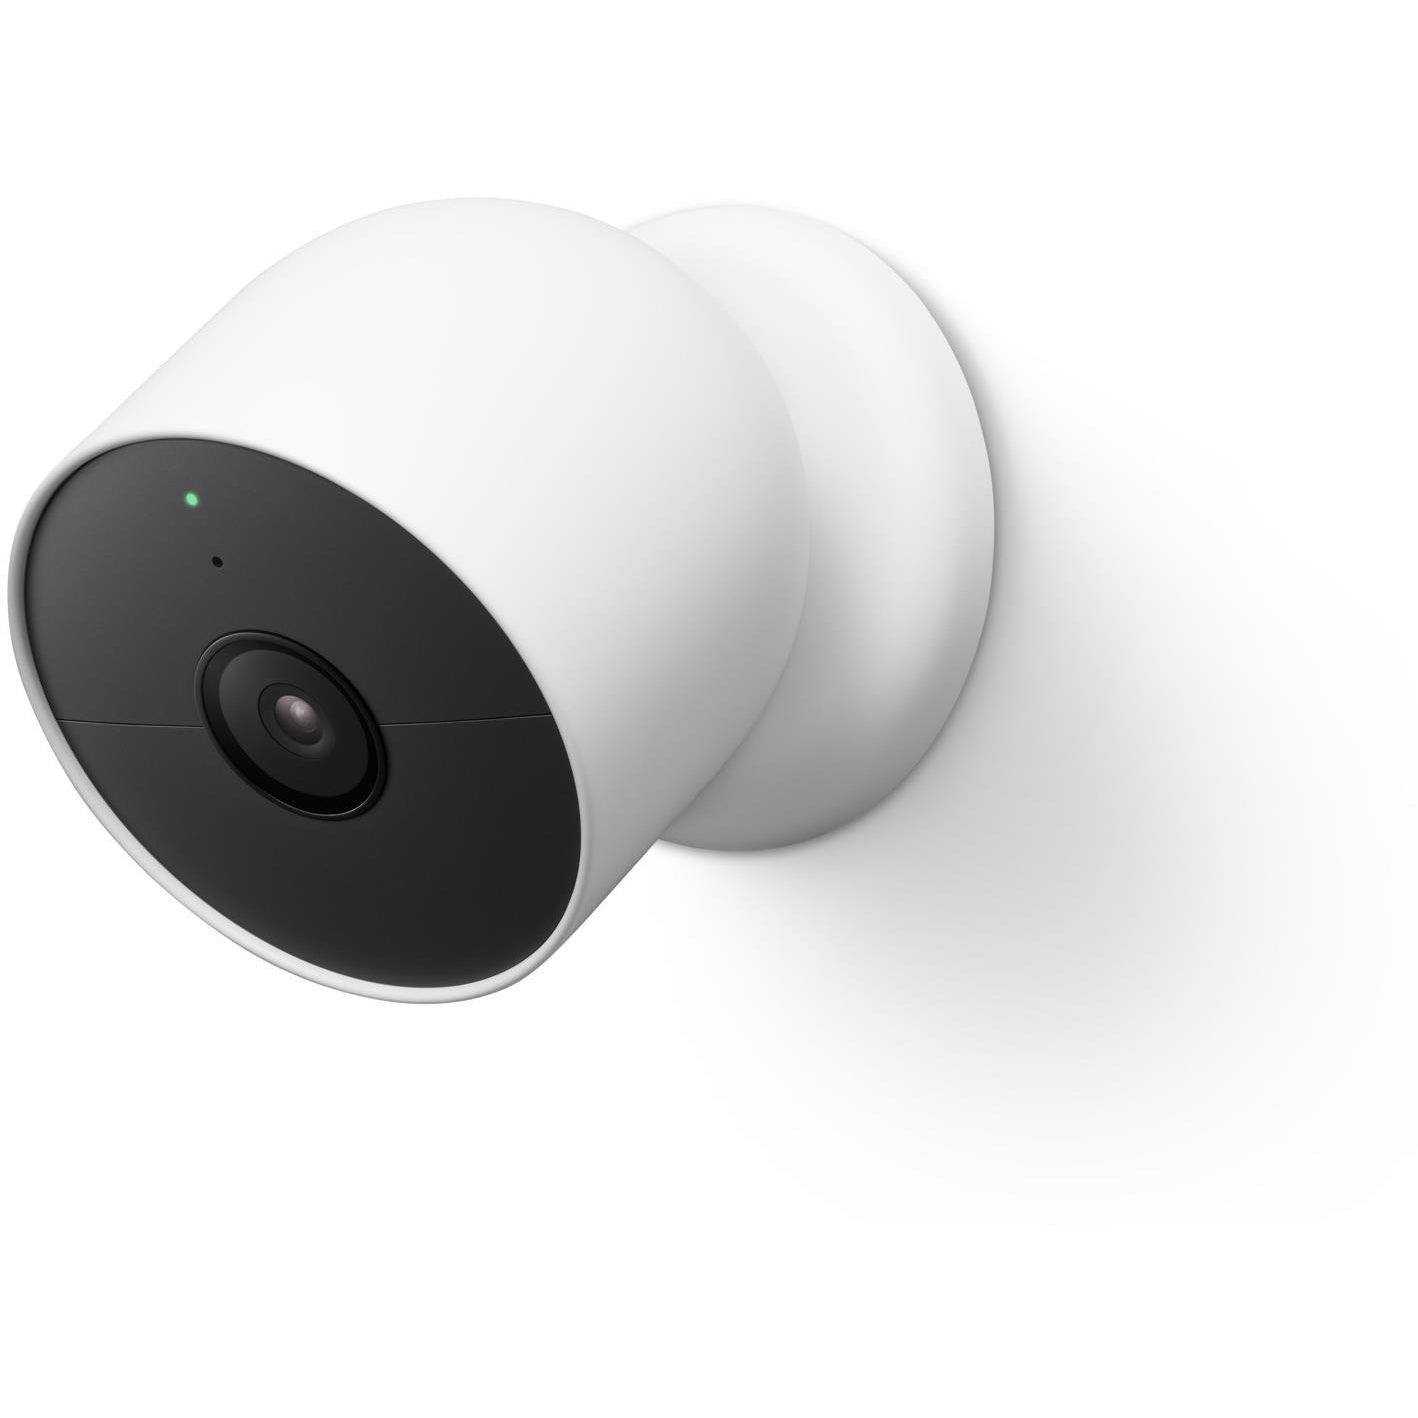 Google Nest Battery Outdoor/Indoor Camera - White - Excellent